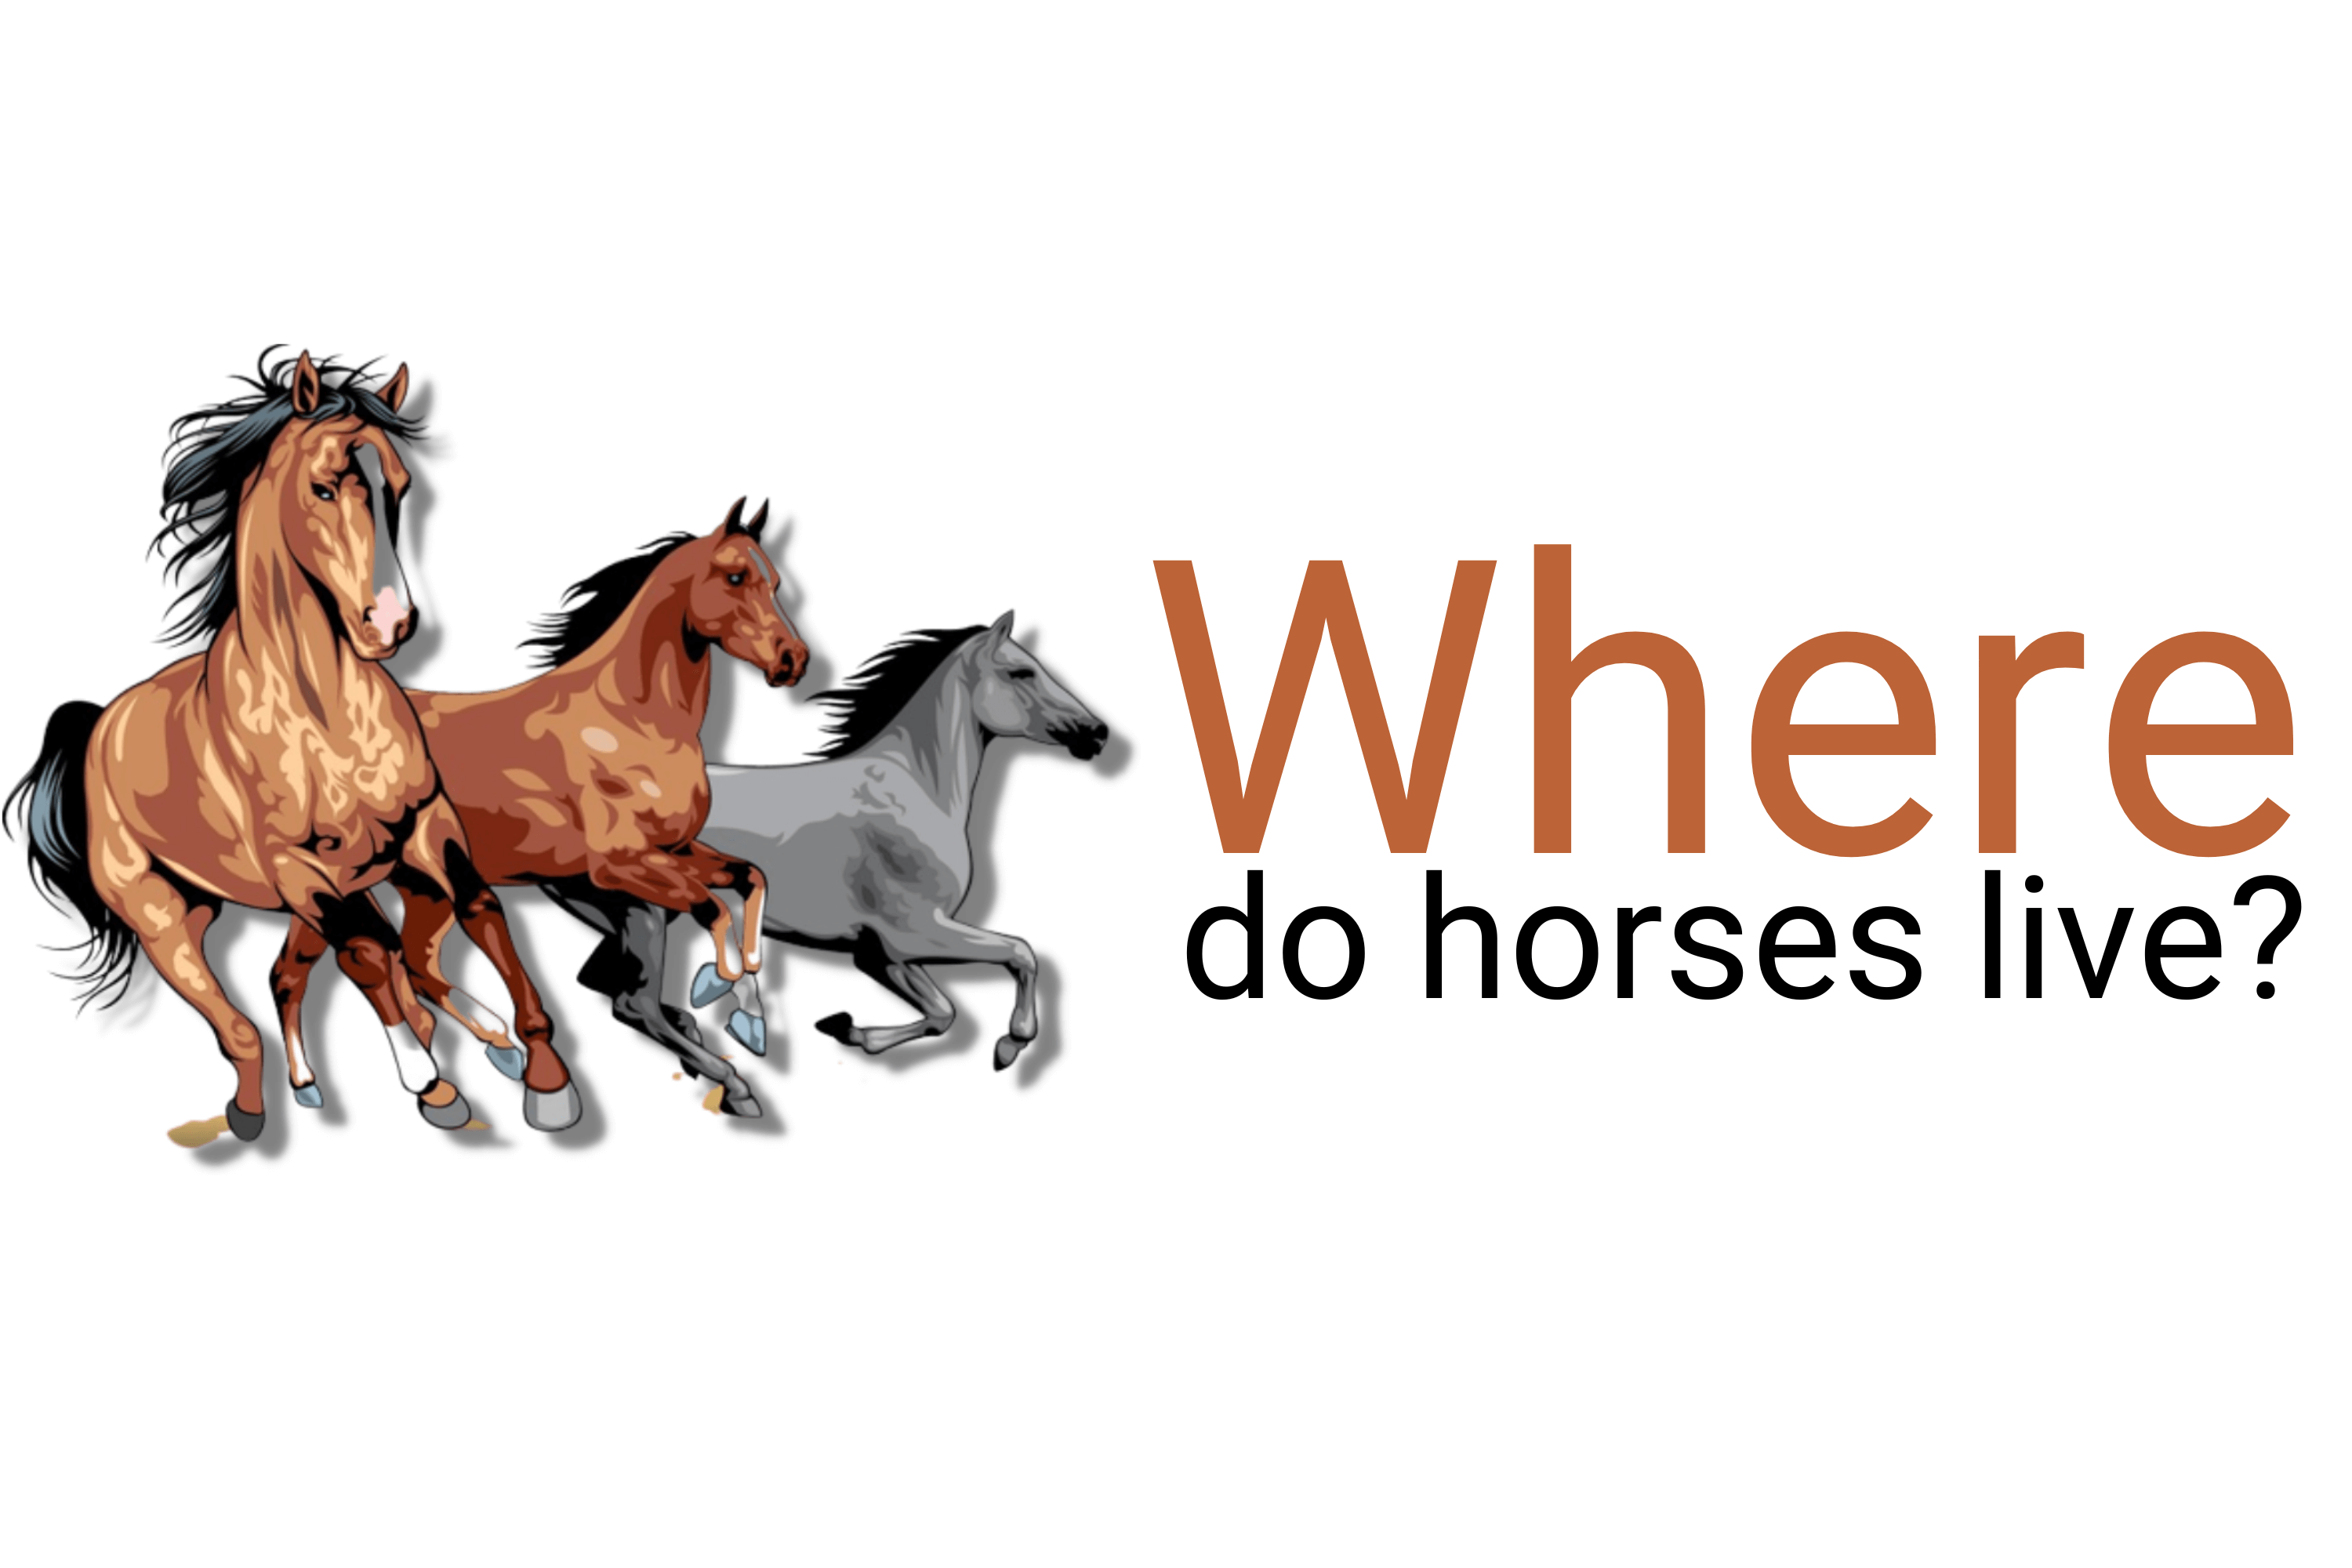 Where do horses live?